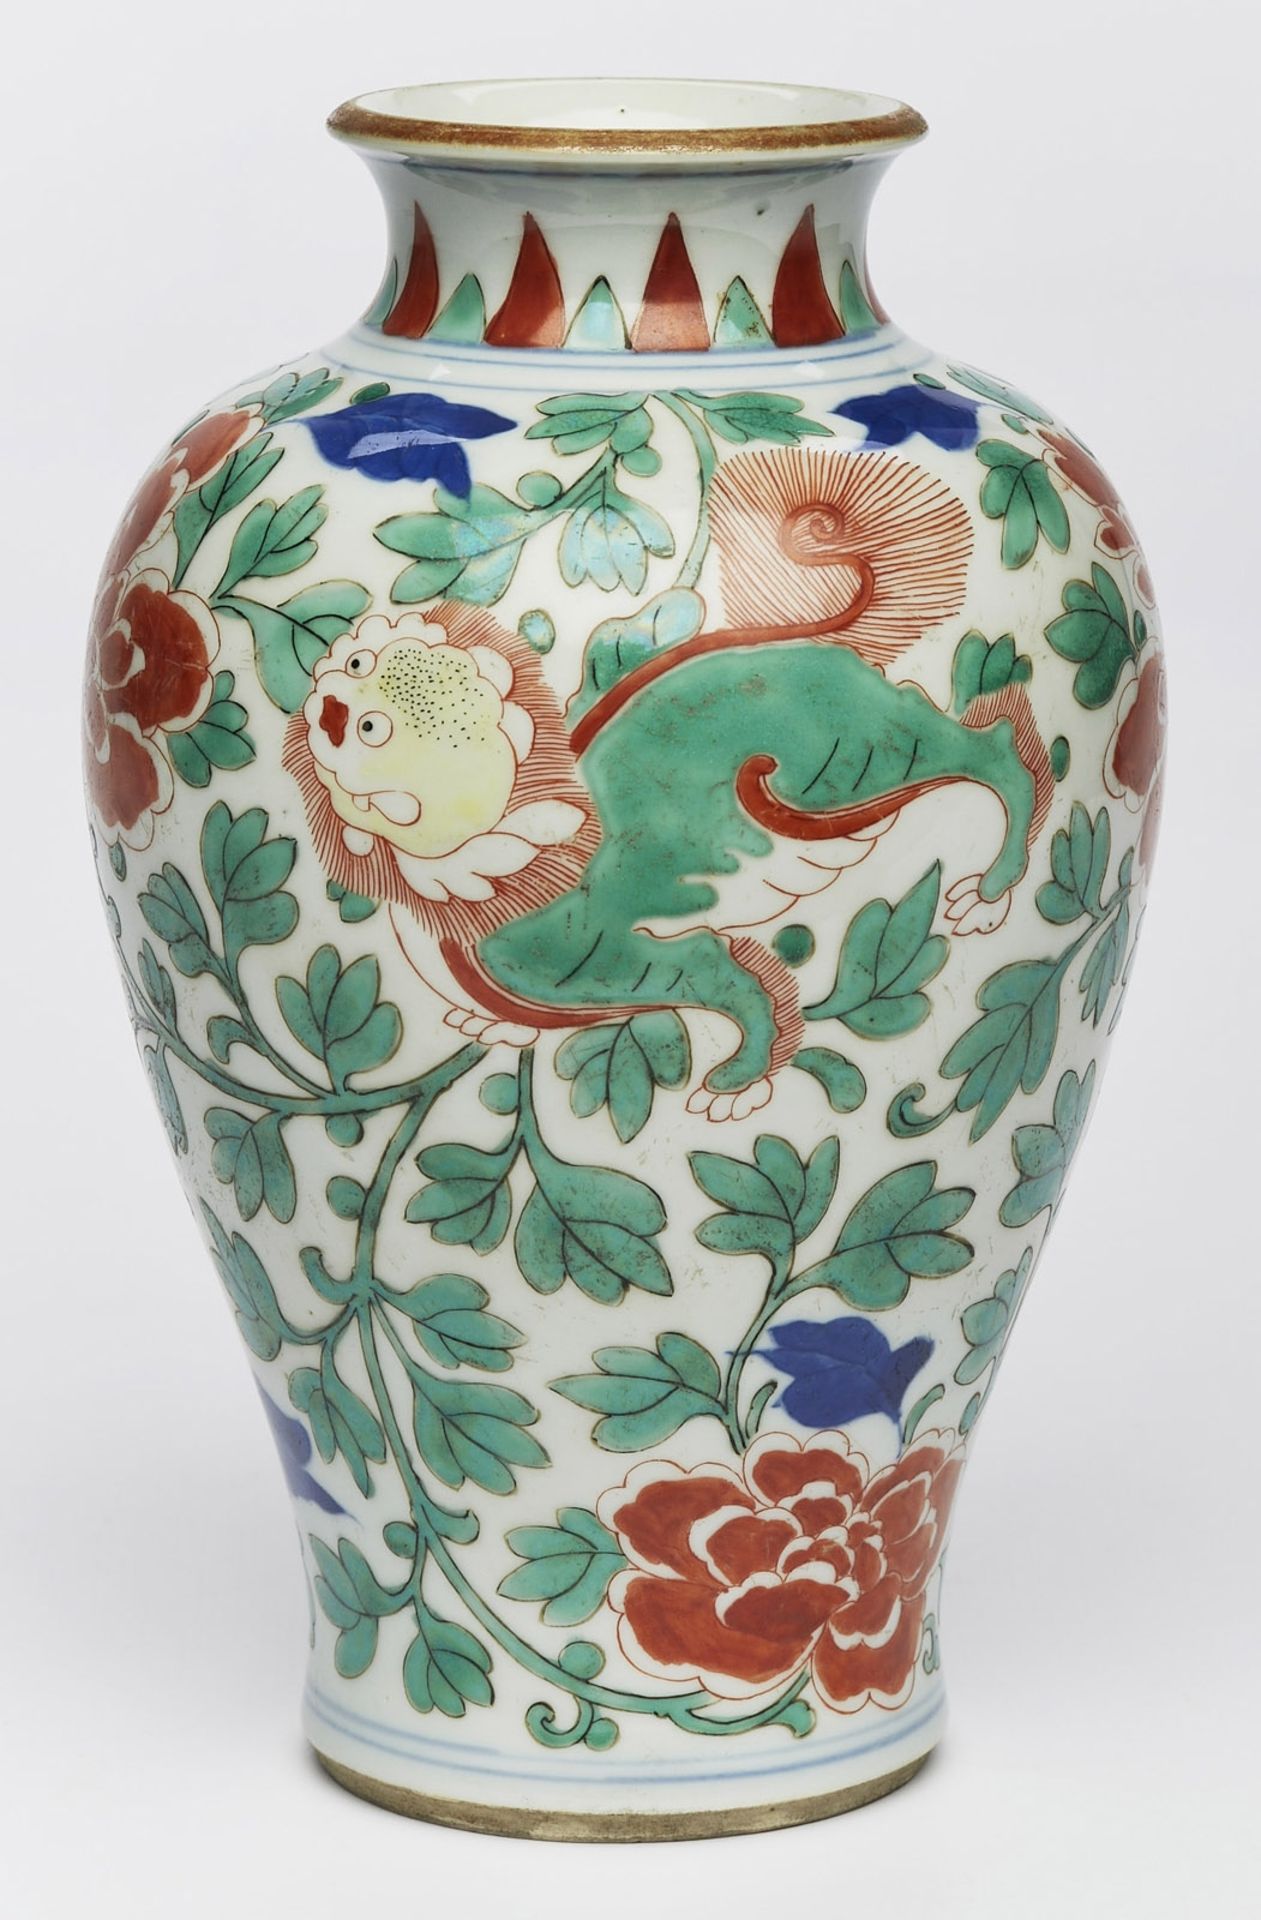 Kl. Vase "Blüten und Phohunde", China wohl 18 Jh. - Bild 2 aus 2